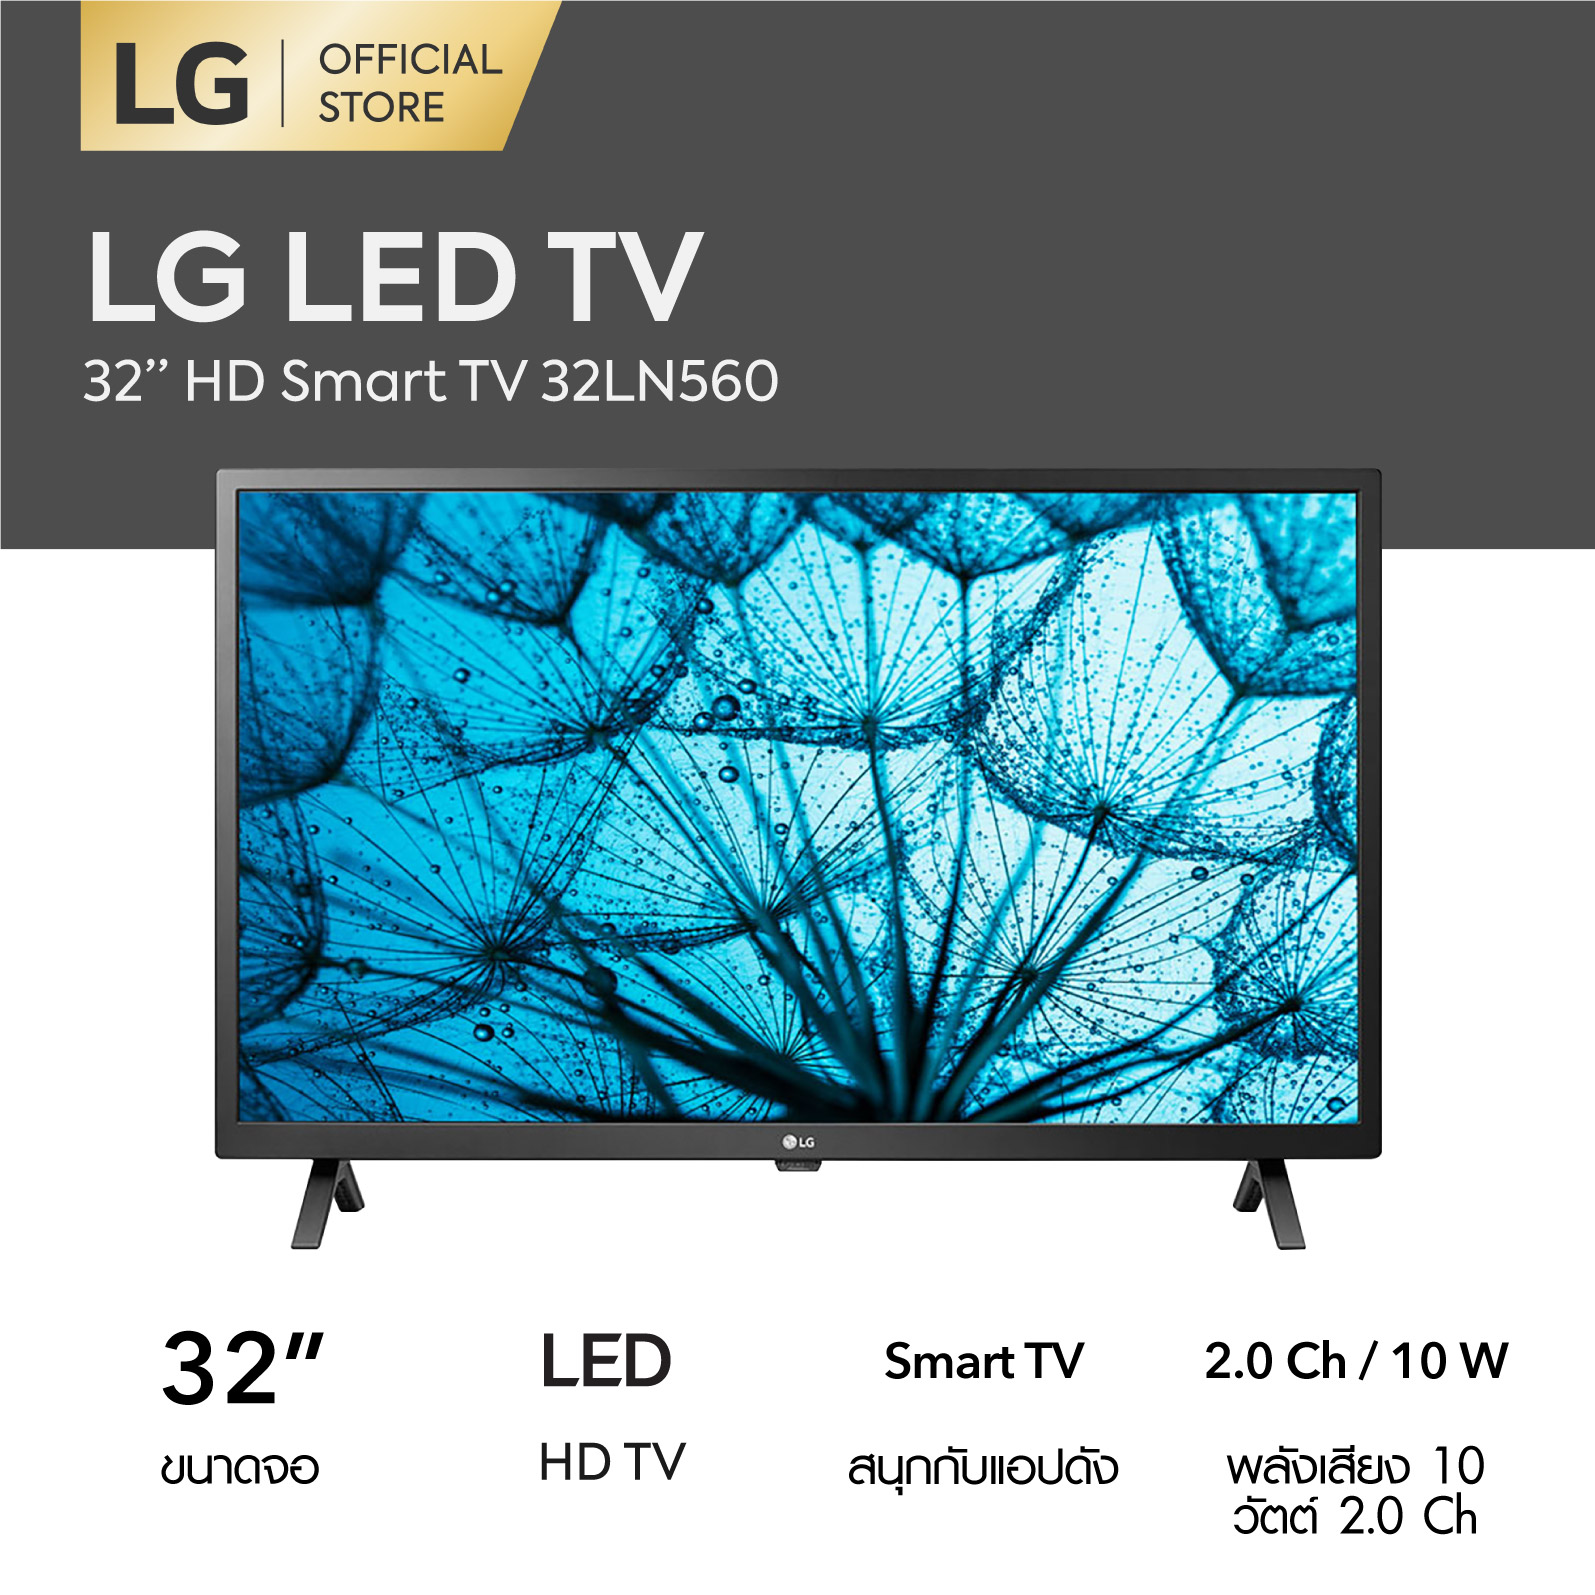 LG LED TV 32